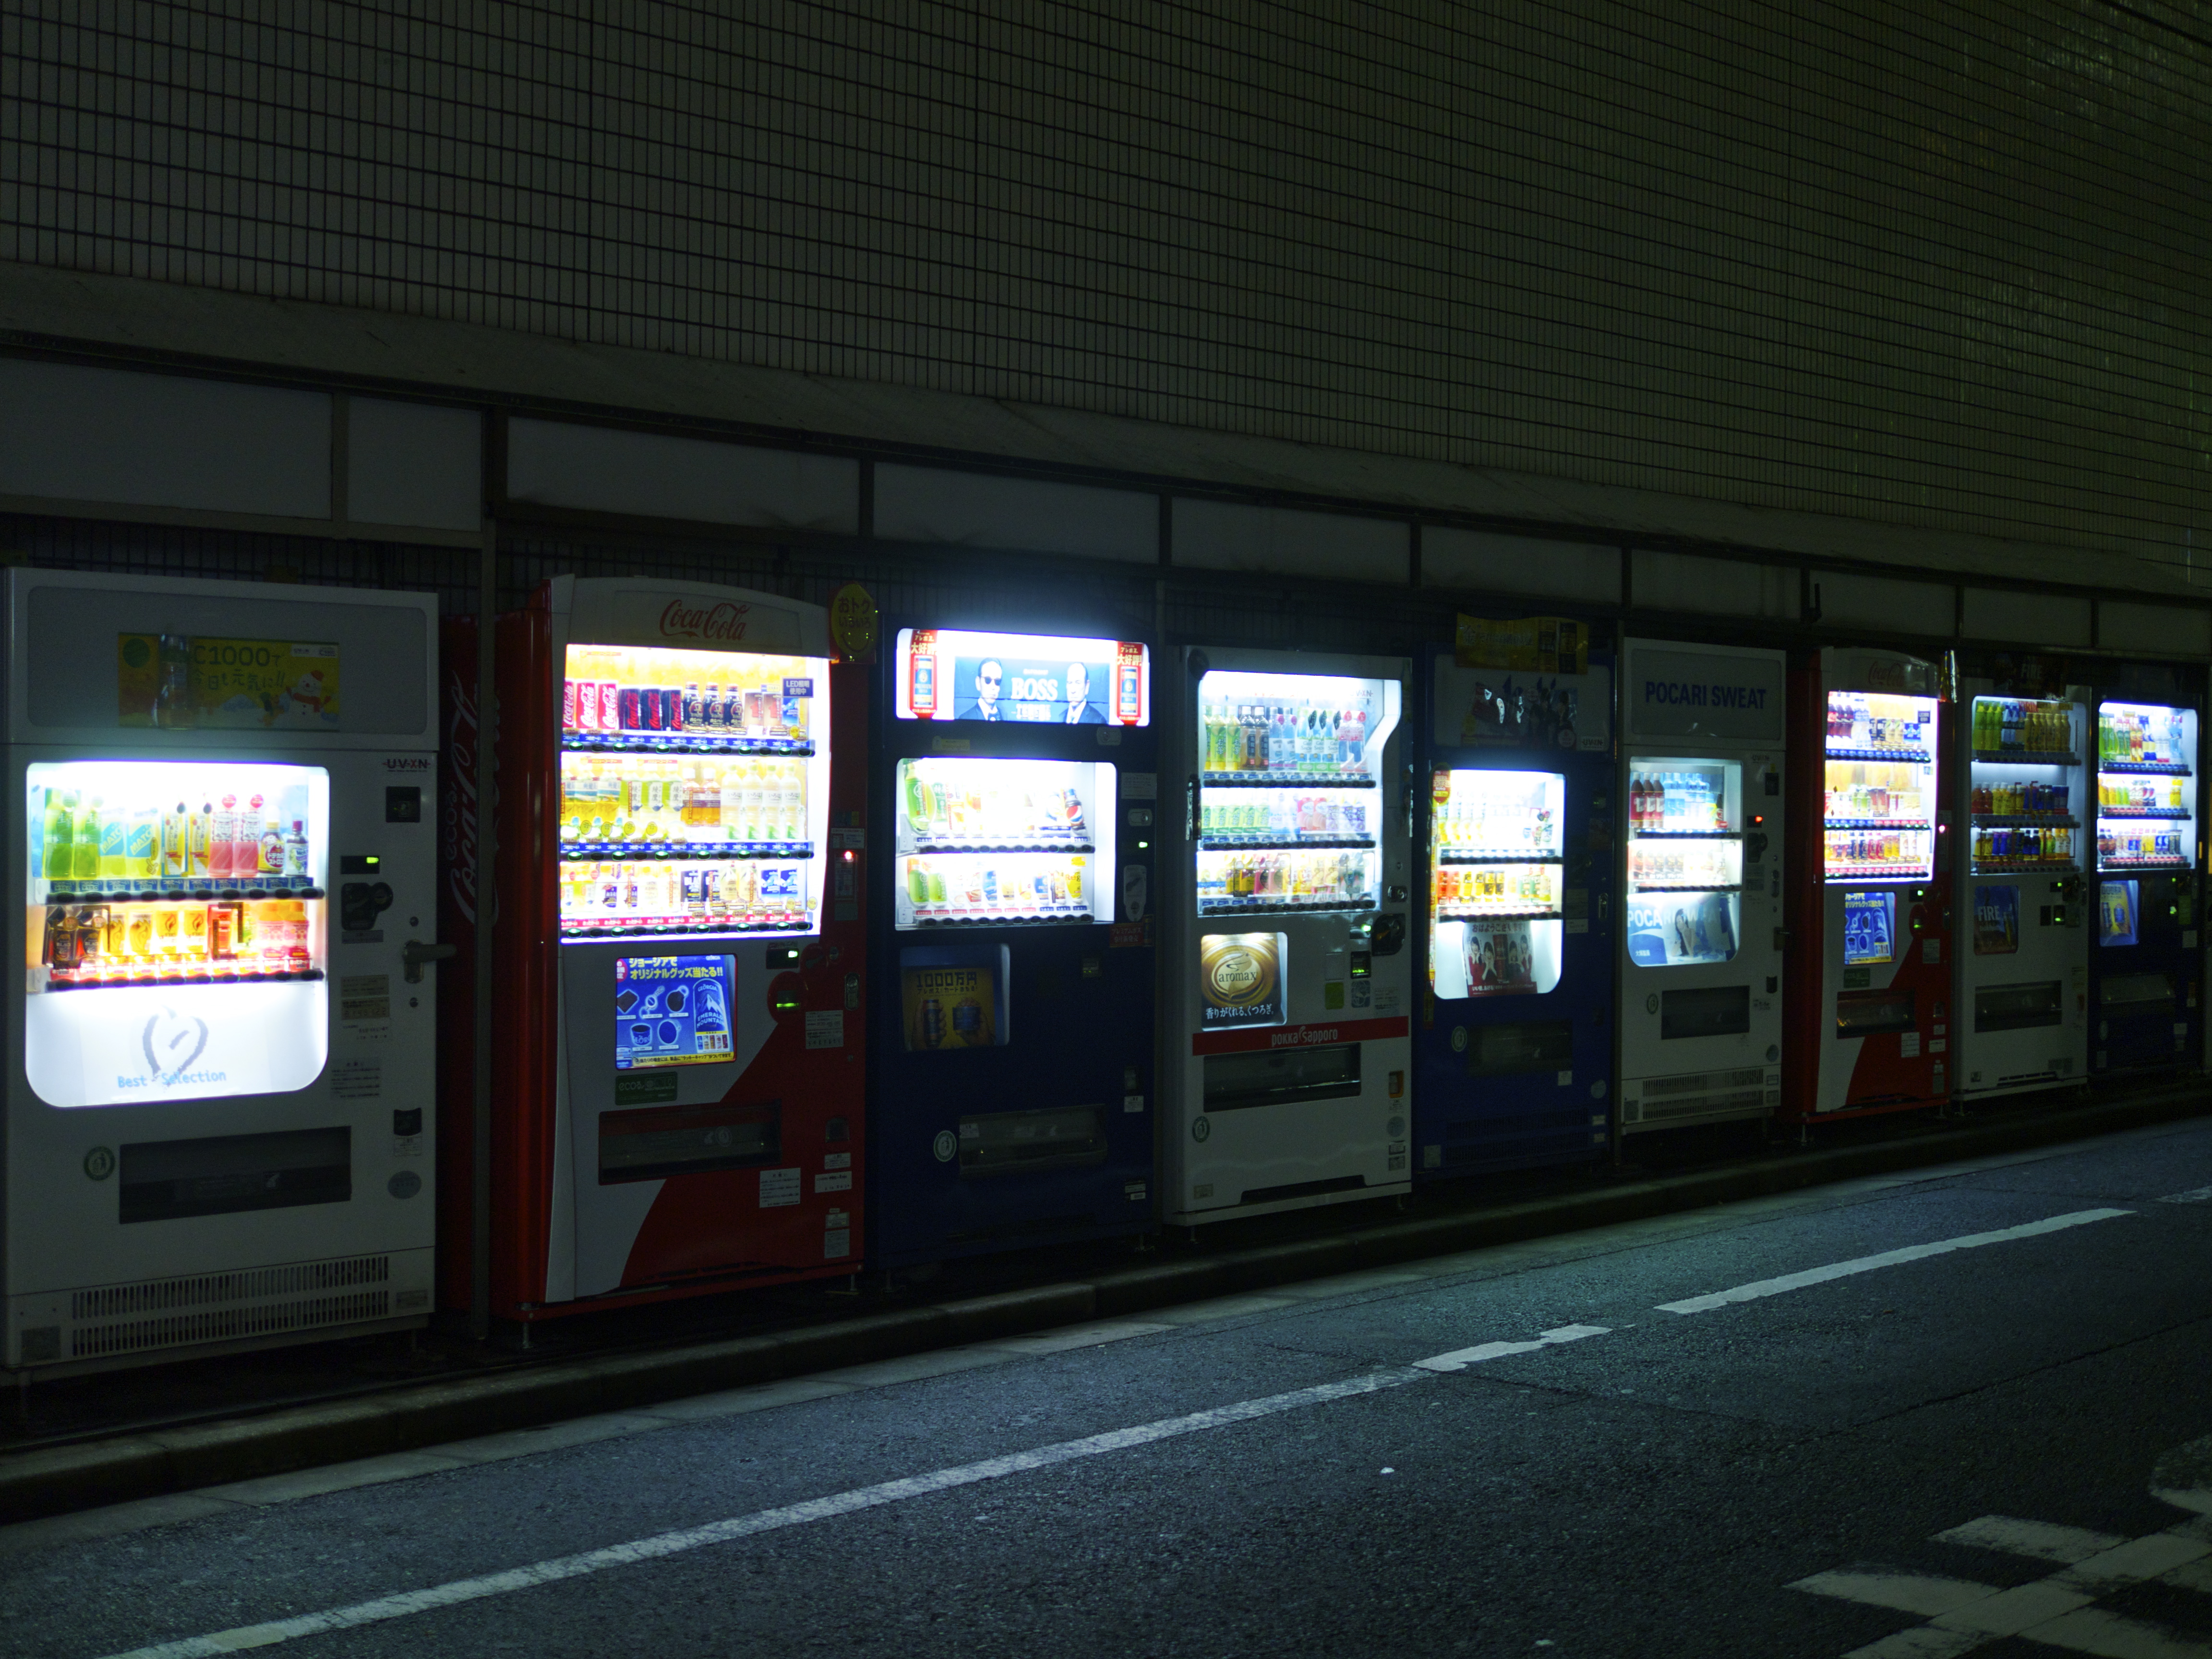 Wallpaper, street, urban, Japan, night, Tokyo, machine, vending, vm 4608x3456